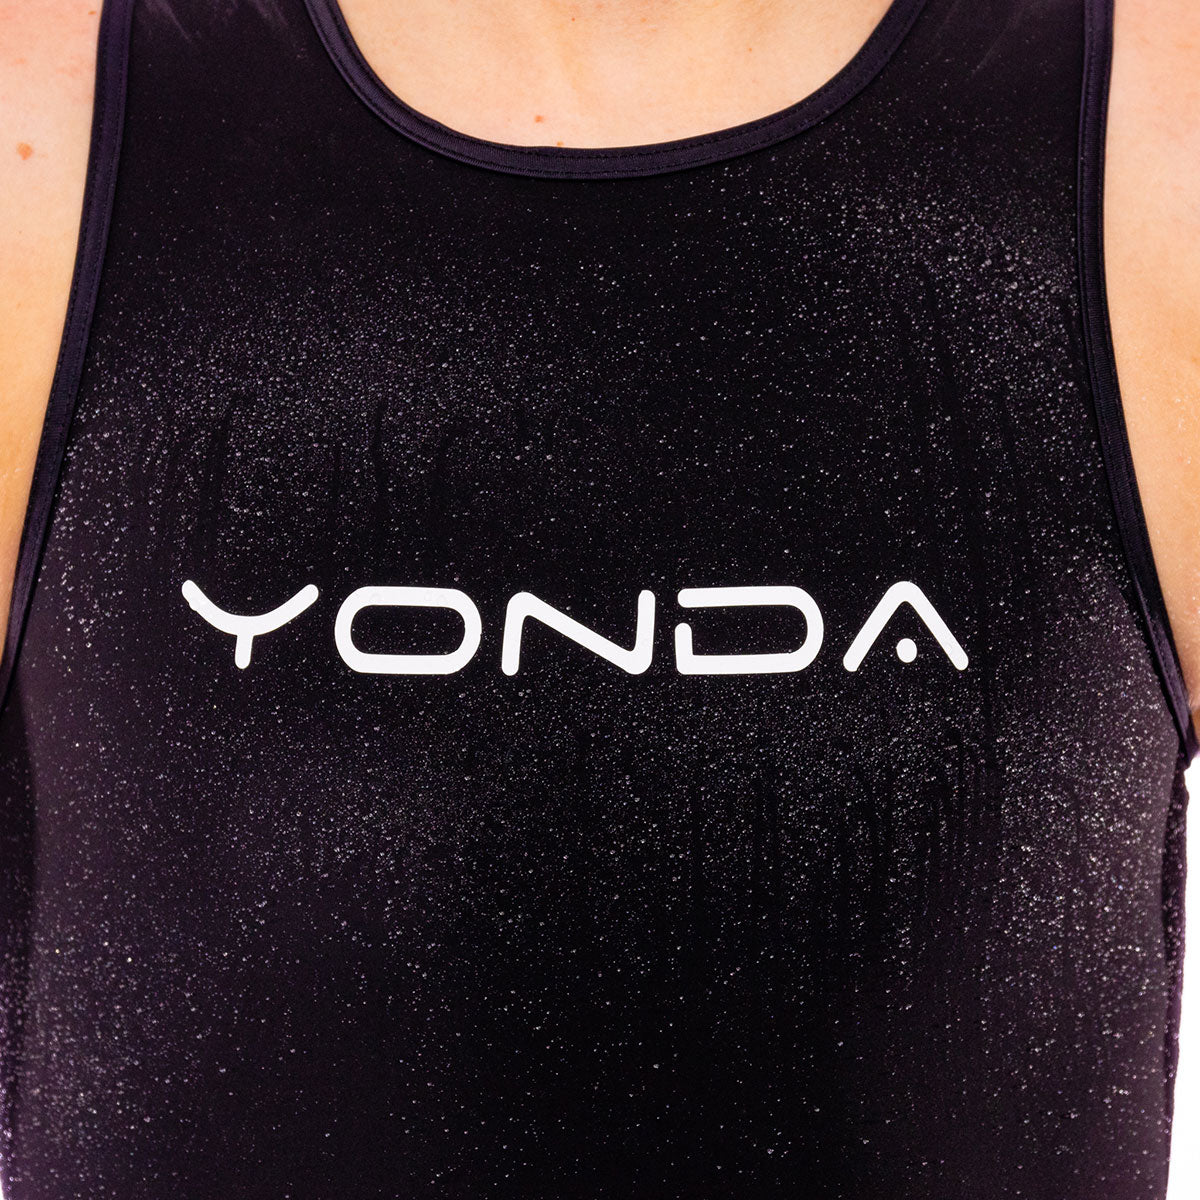 yonda-shoot-details-197-gallery